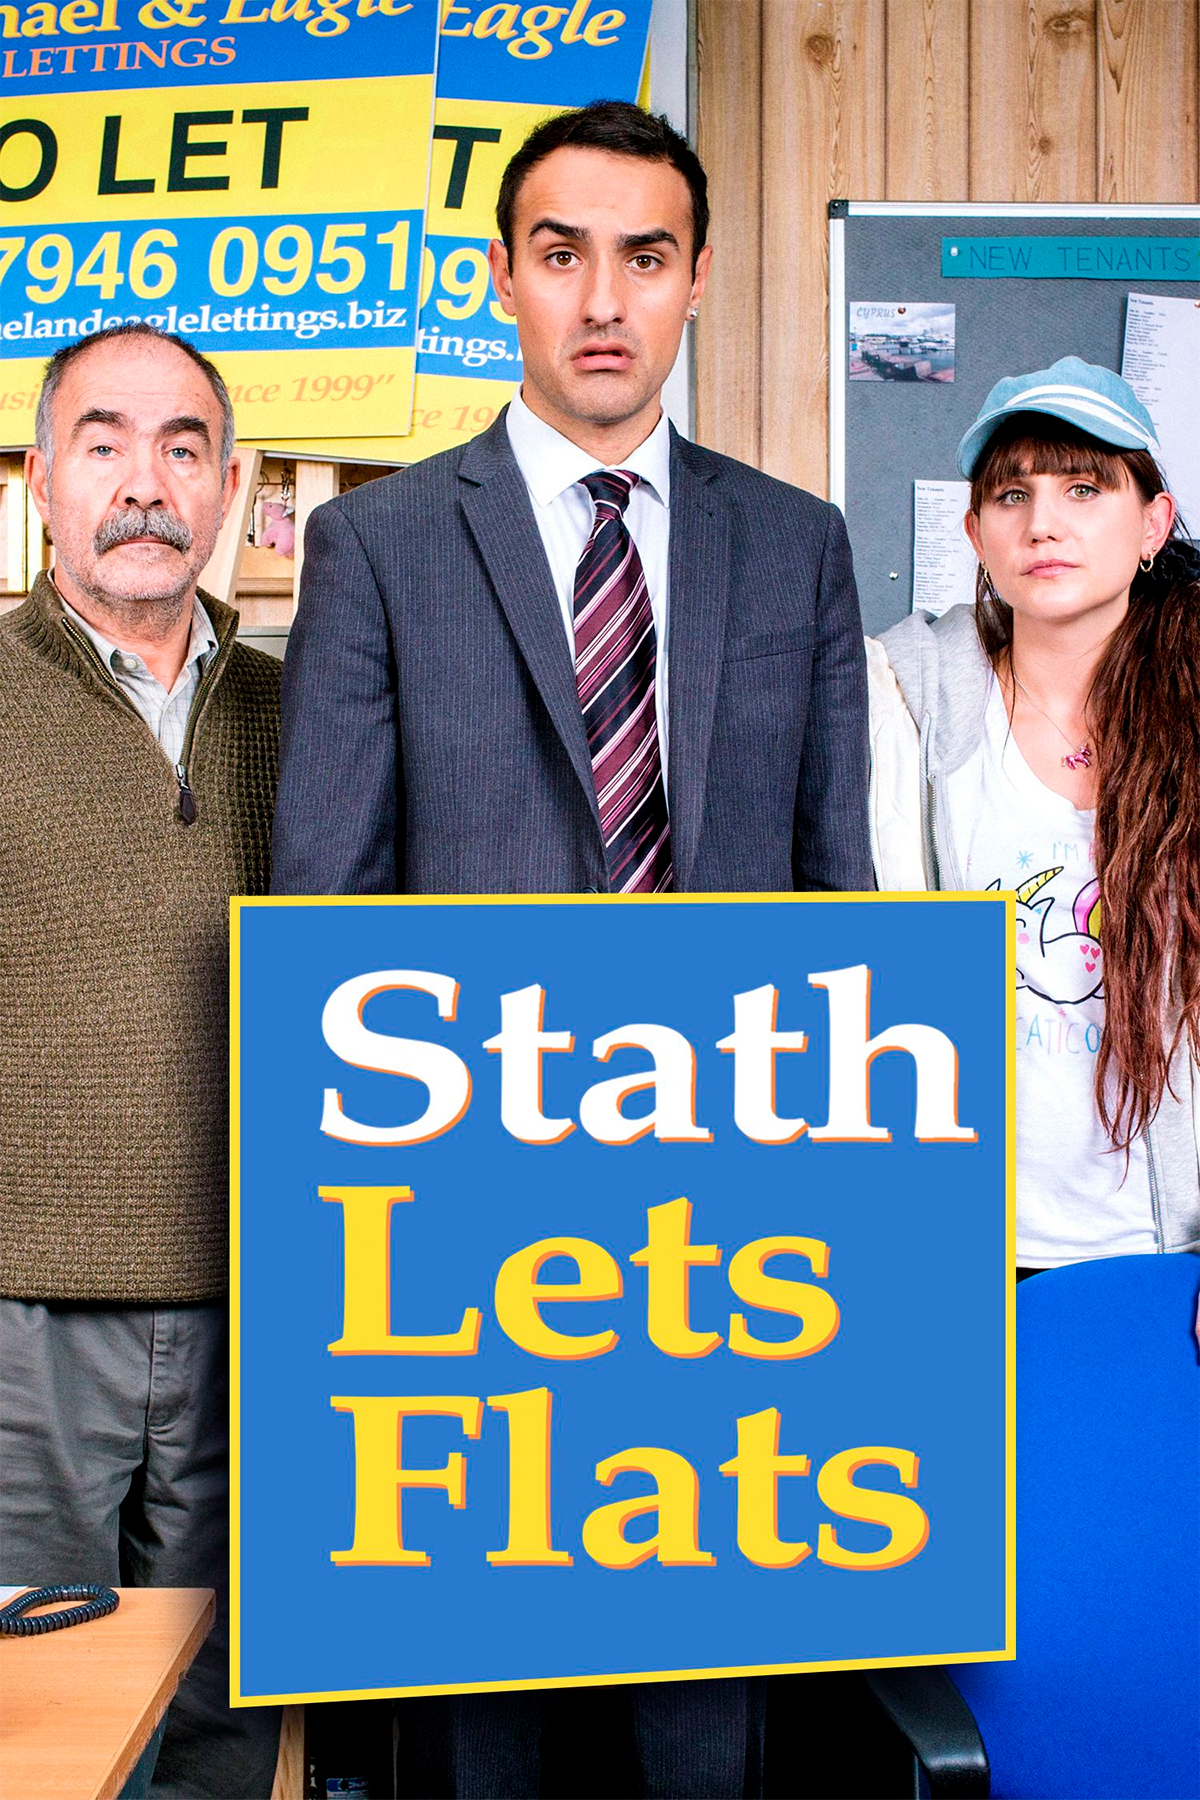 stath lets flats episodes